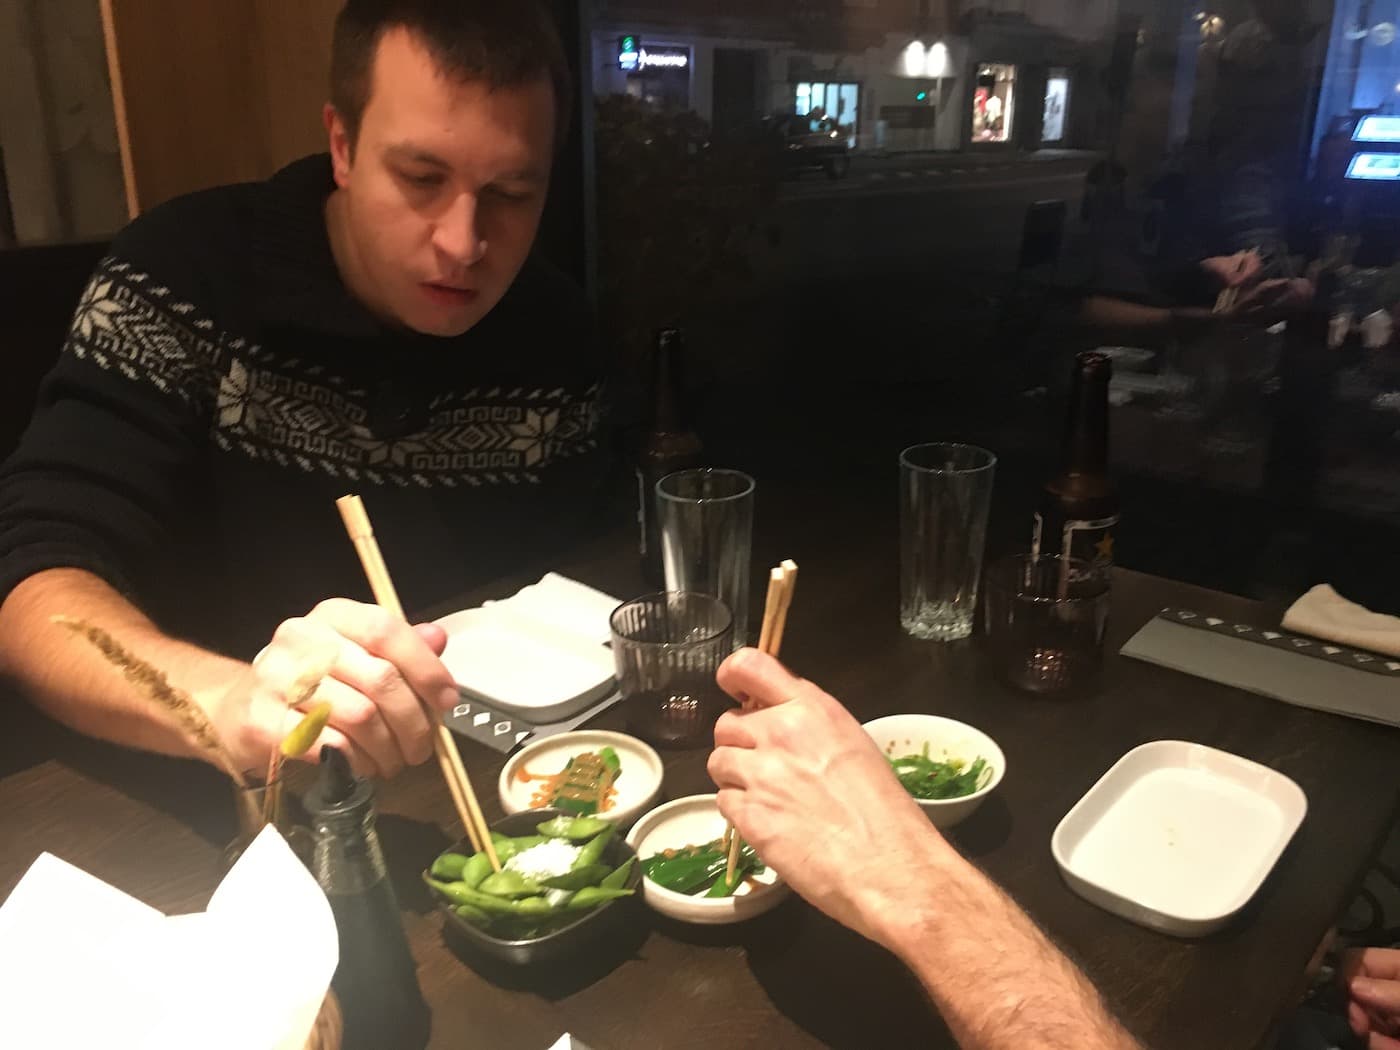 Andrii eating sushi frederiksberg march 2020